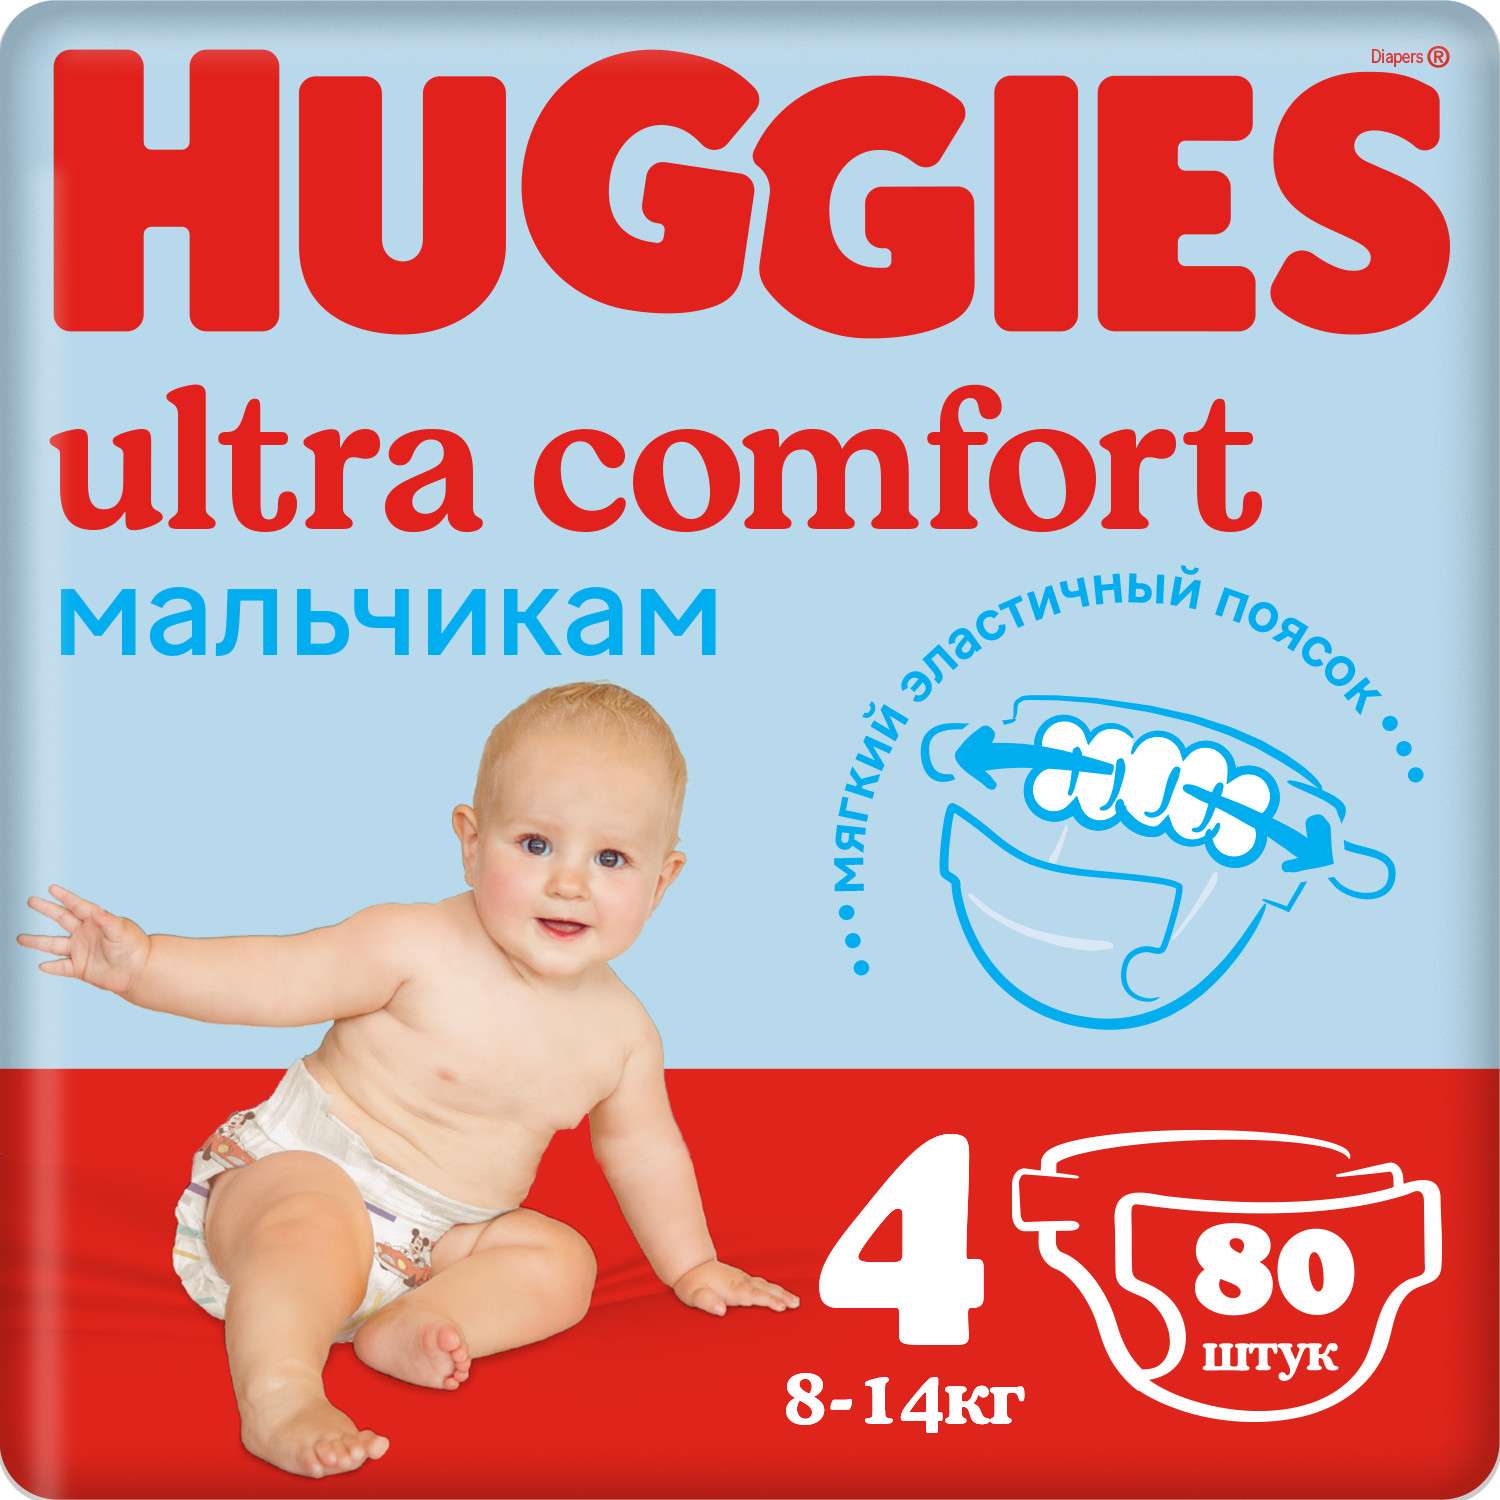 HUGGIES ULTRA COMFORT 4